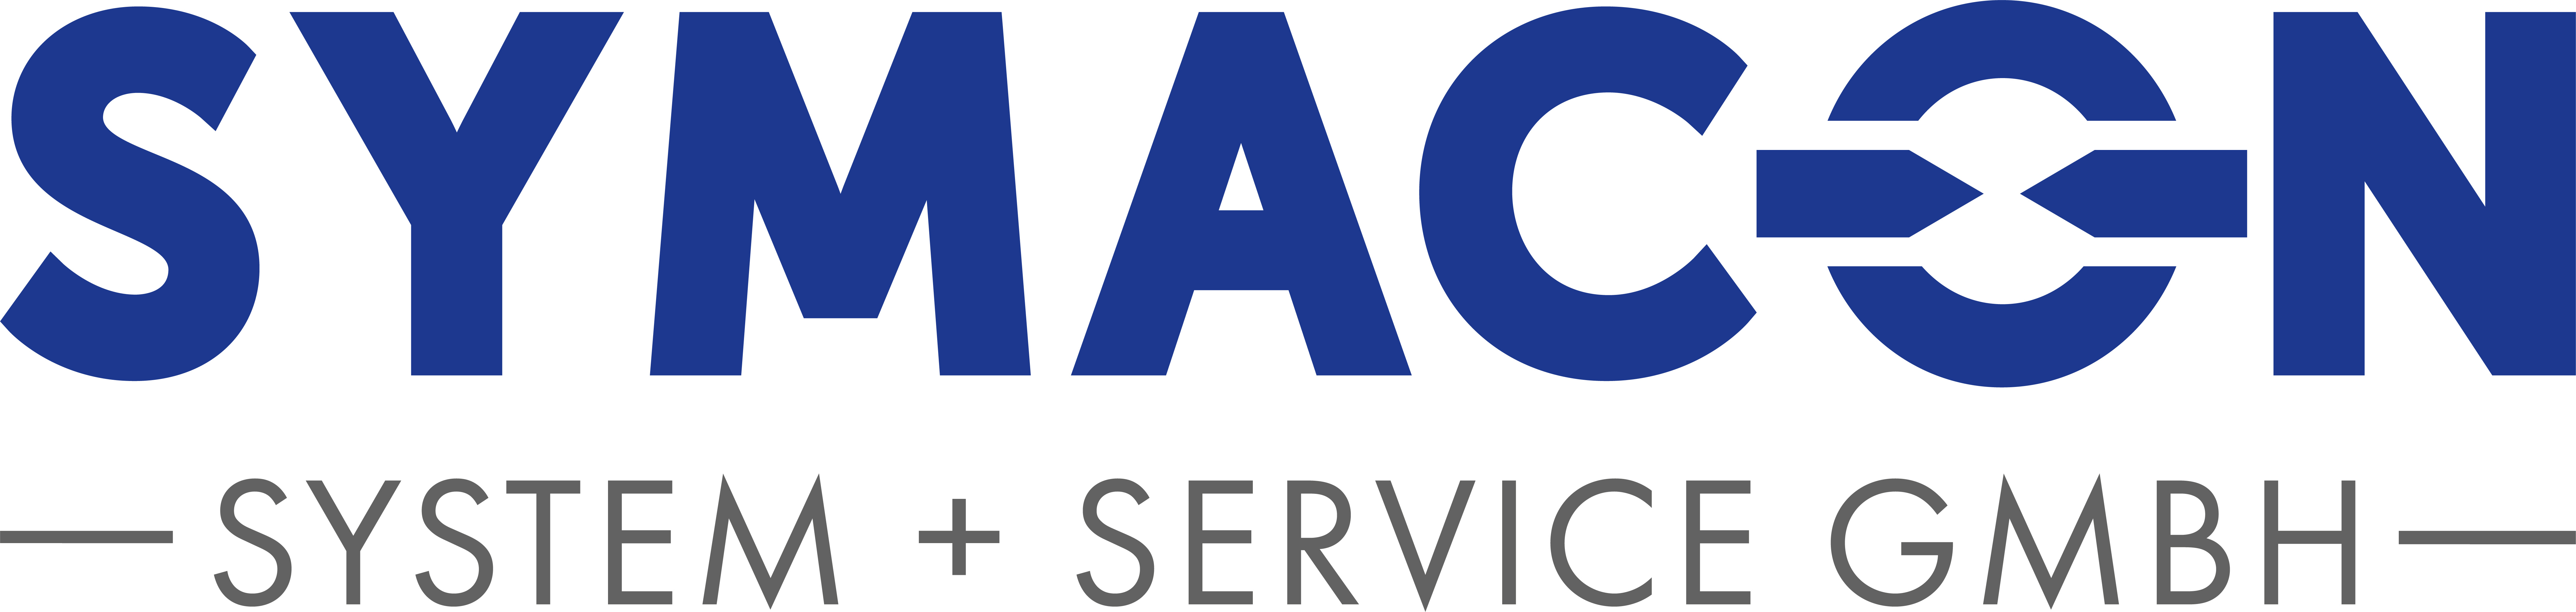 Logo von Symacon System + Service GmbH